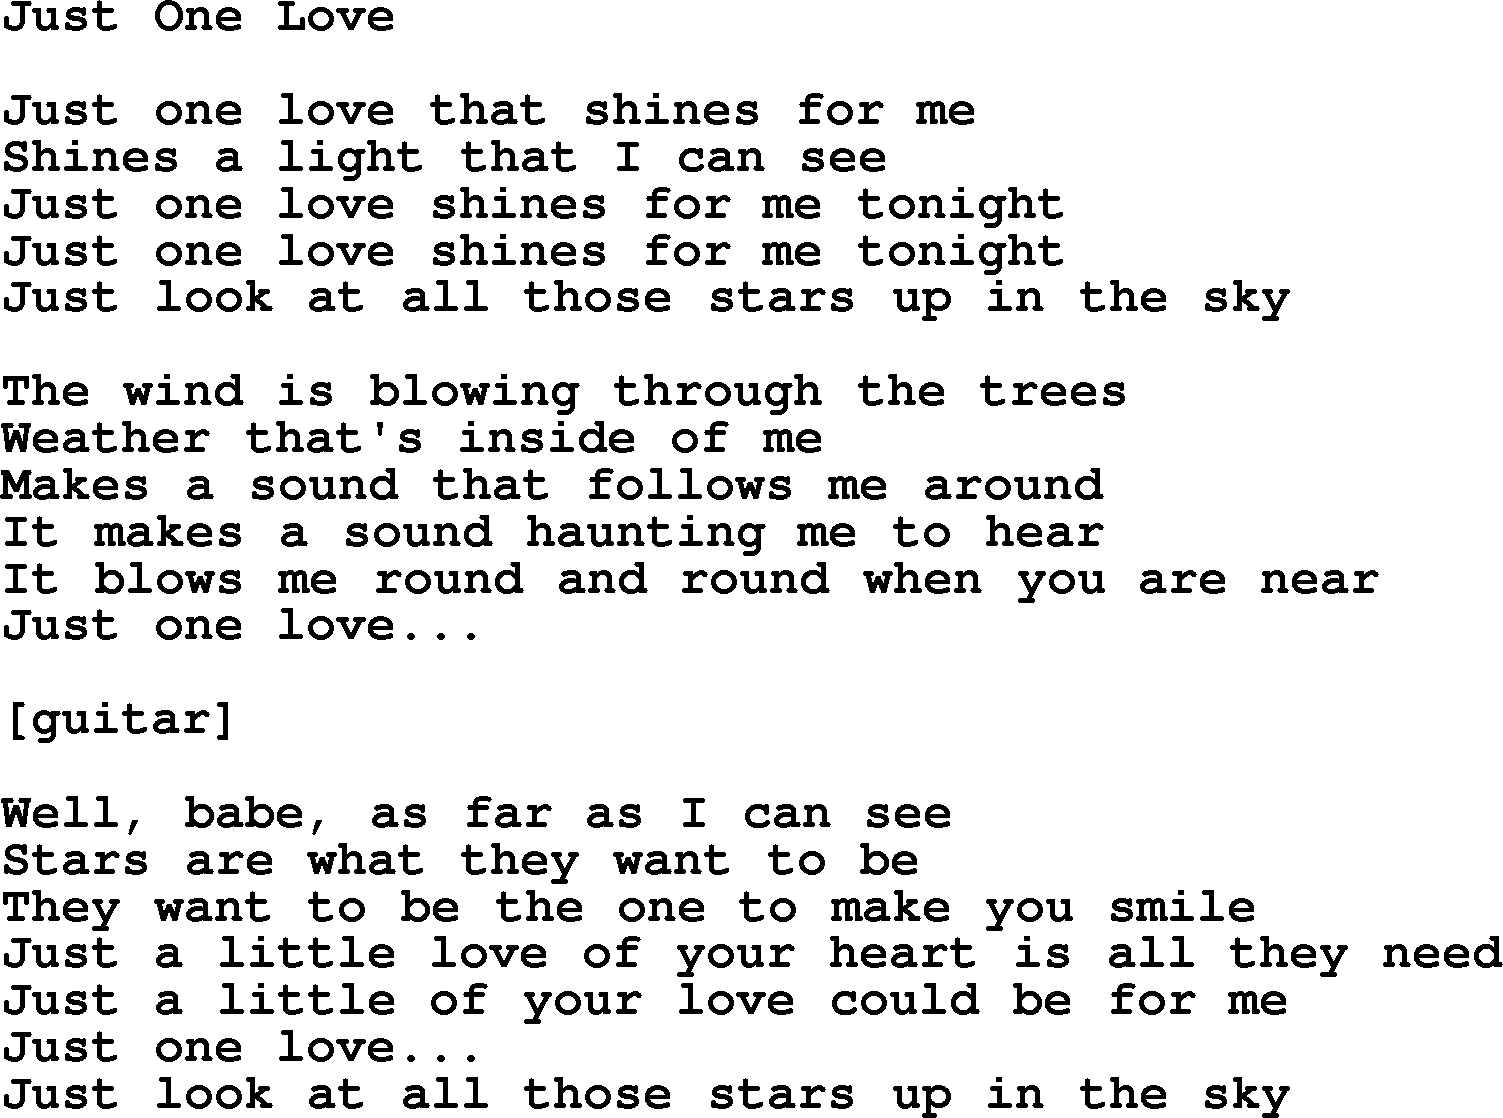 Willie Nelson song: Just One Love lyrics